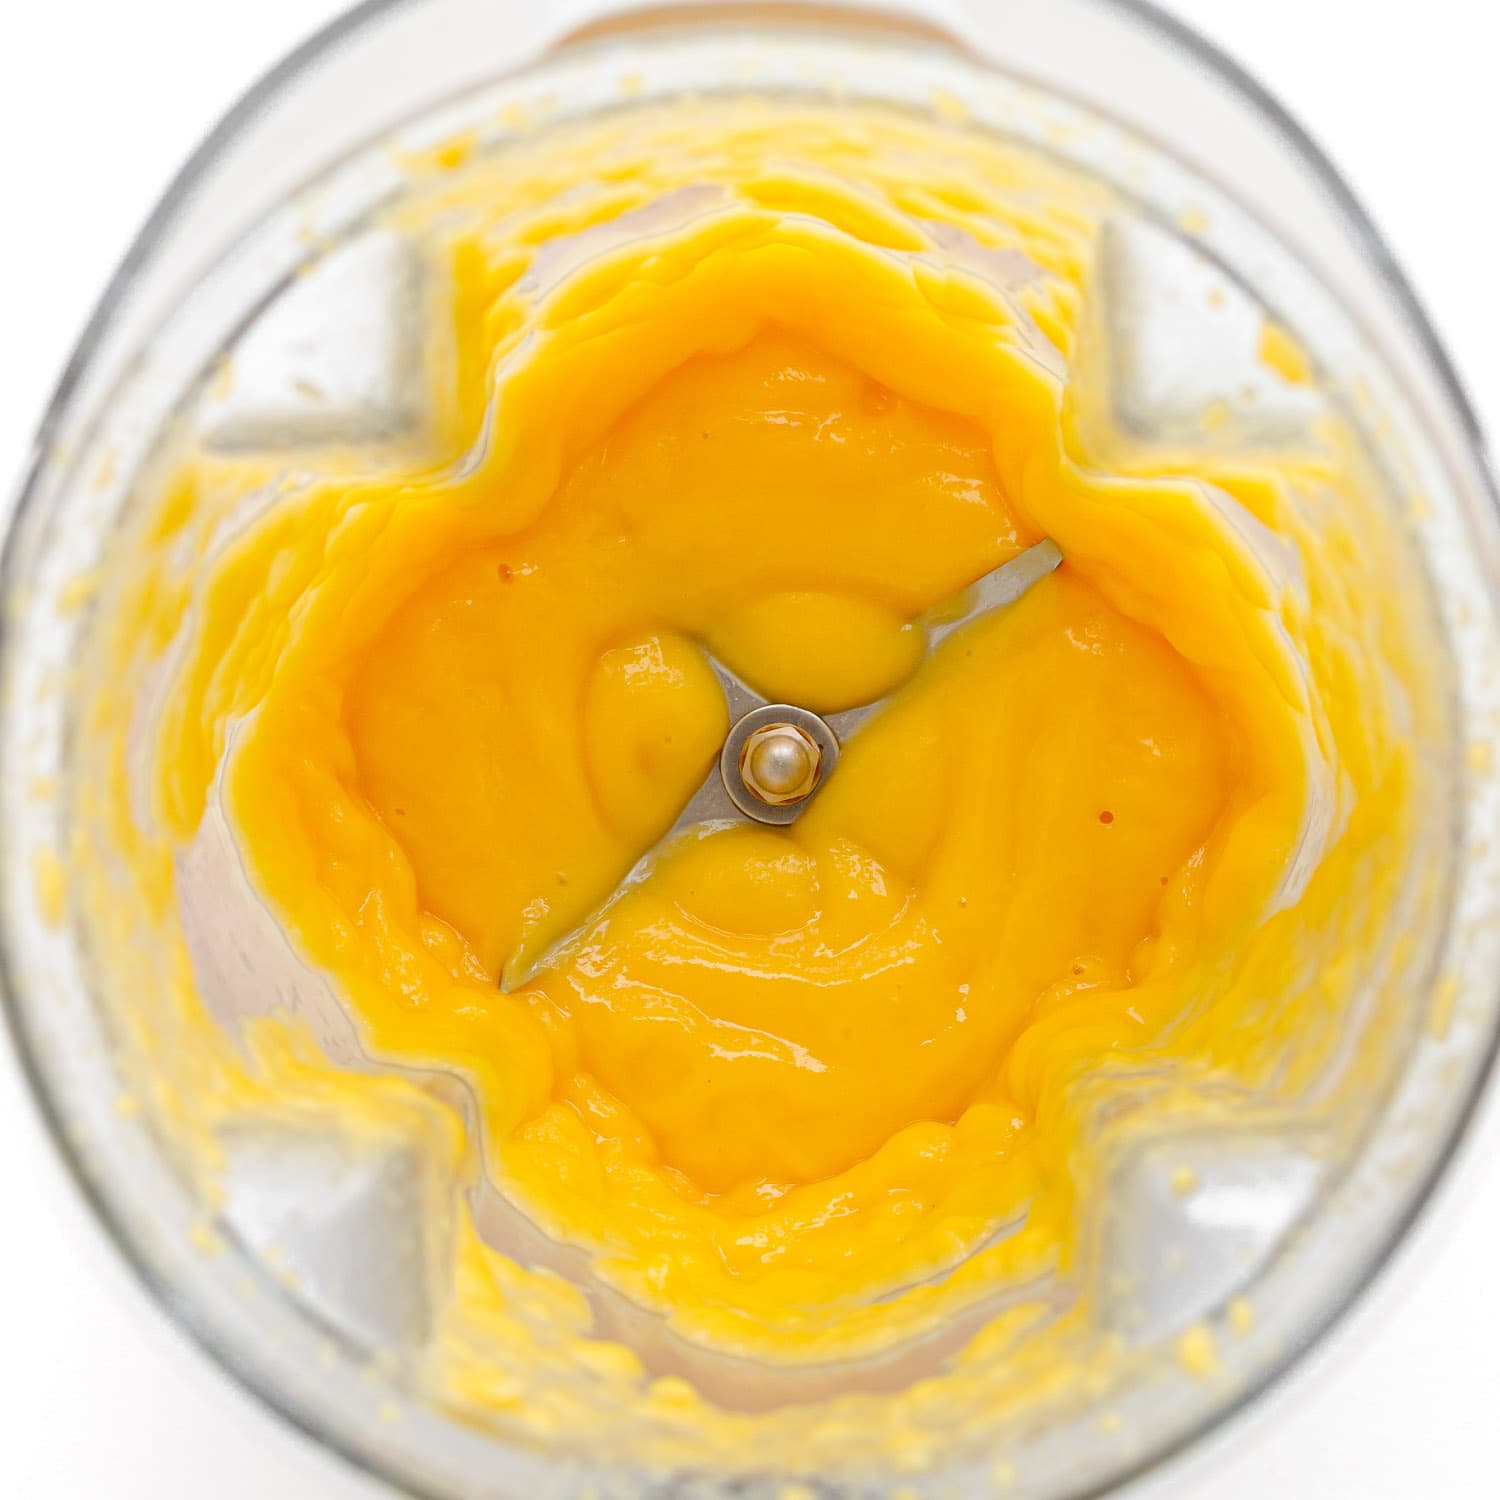 Pureed mango in a blender.